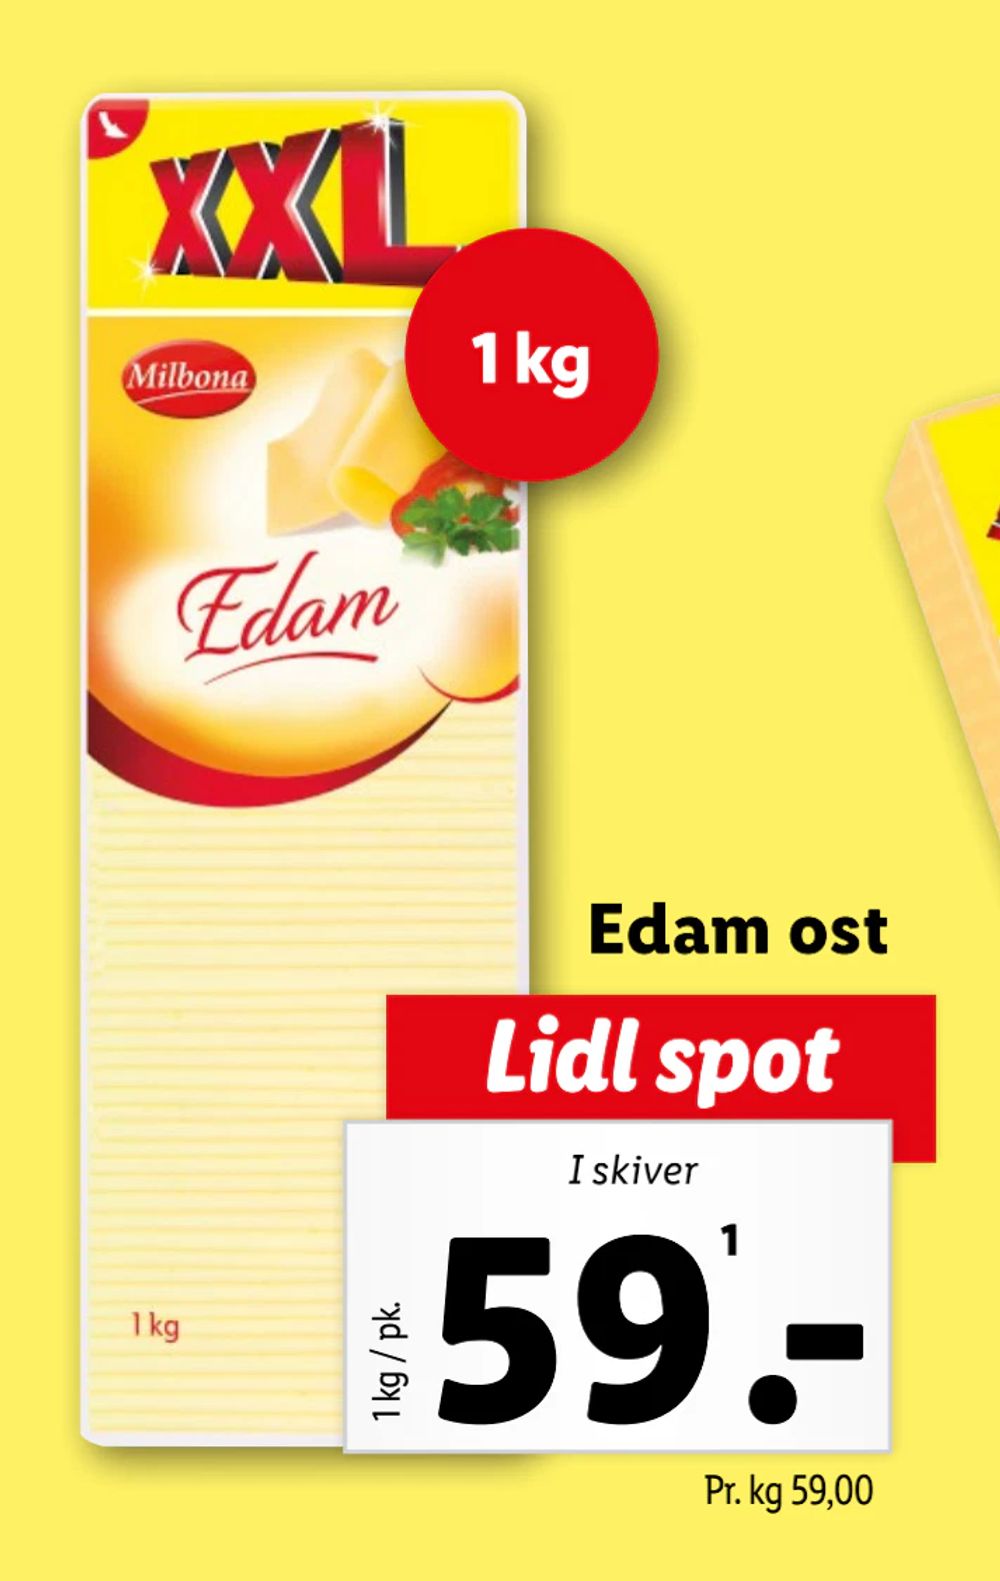 Tilbud på Edam ost fra Lidl til 59 kr.